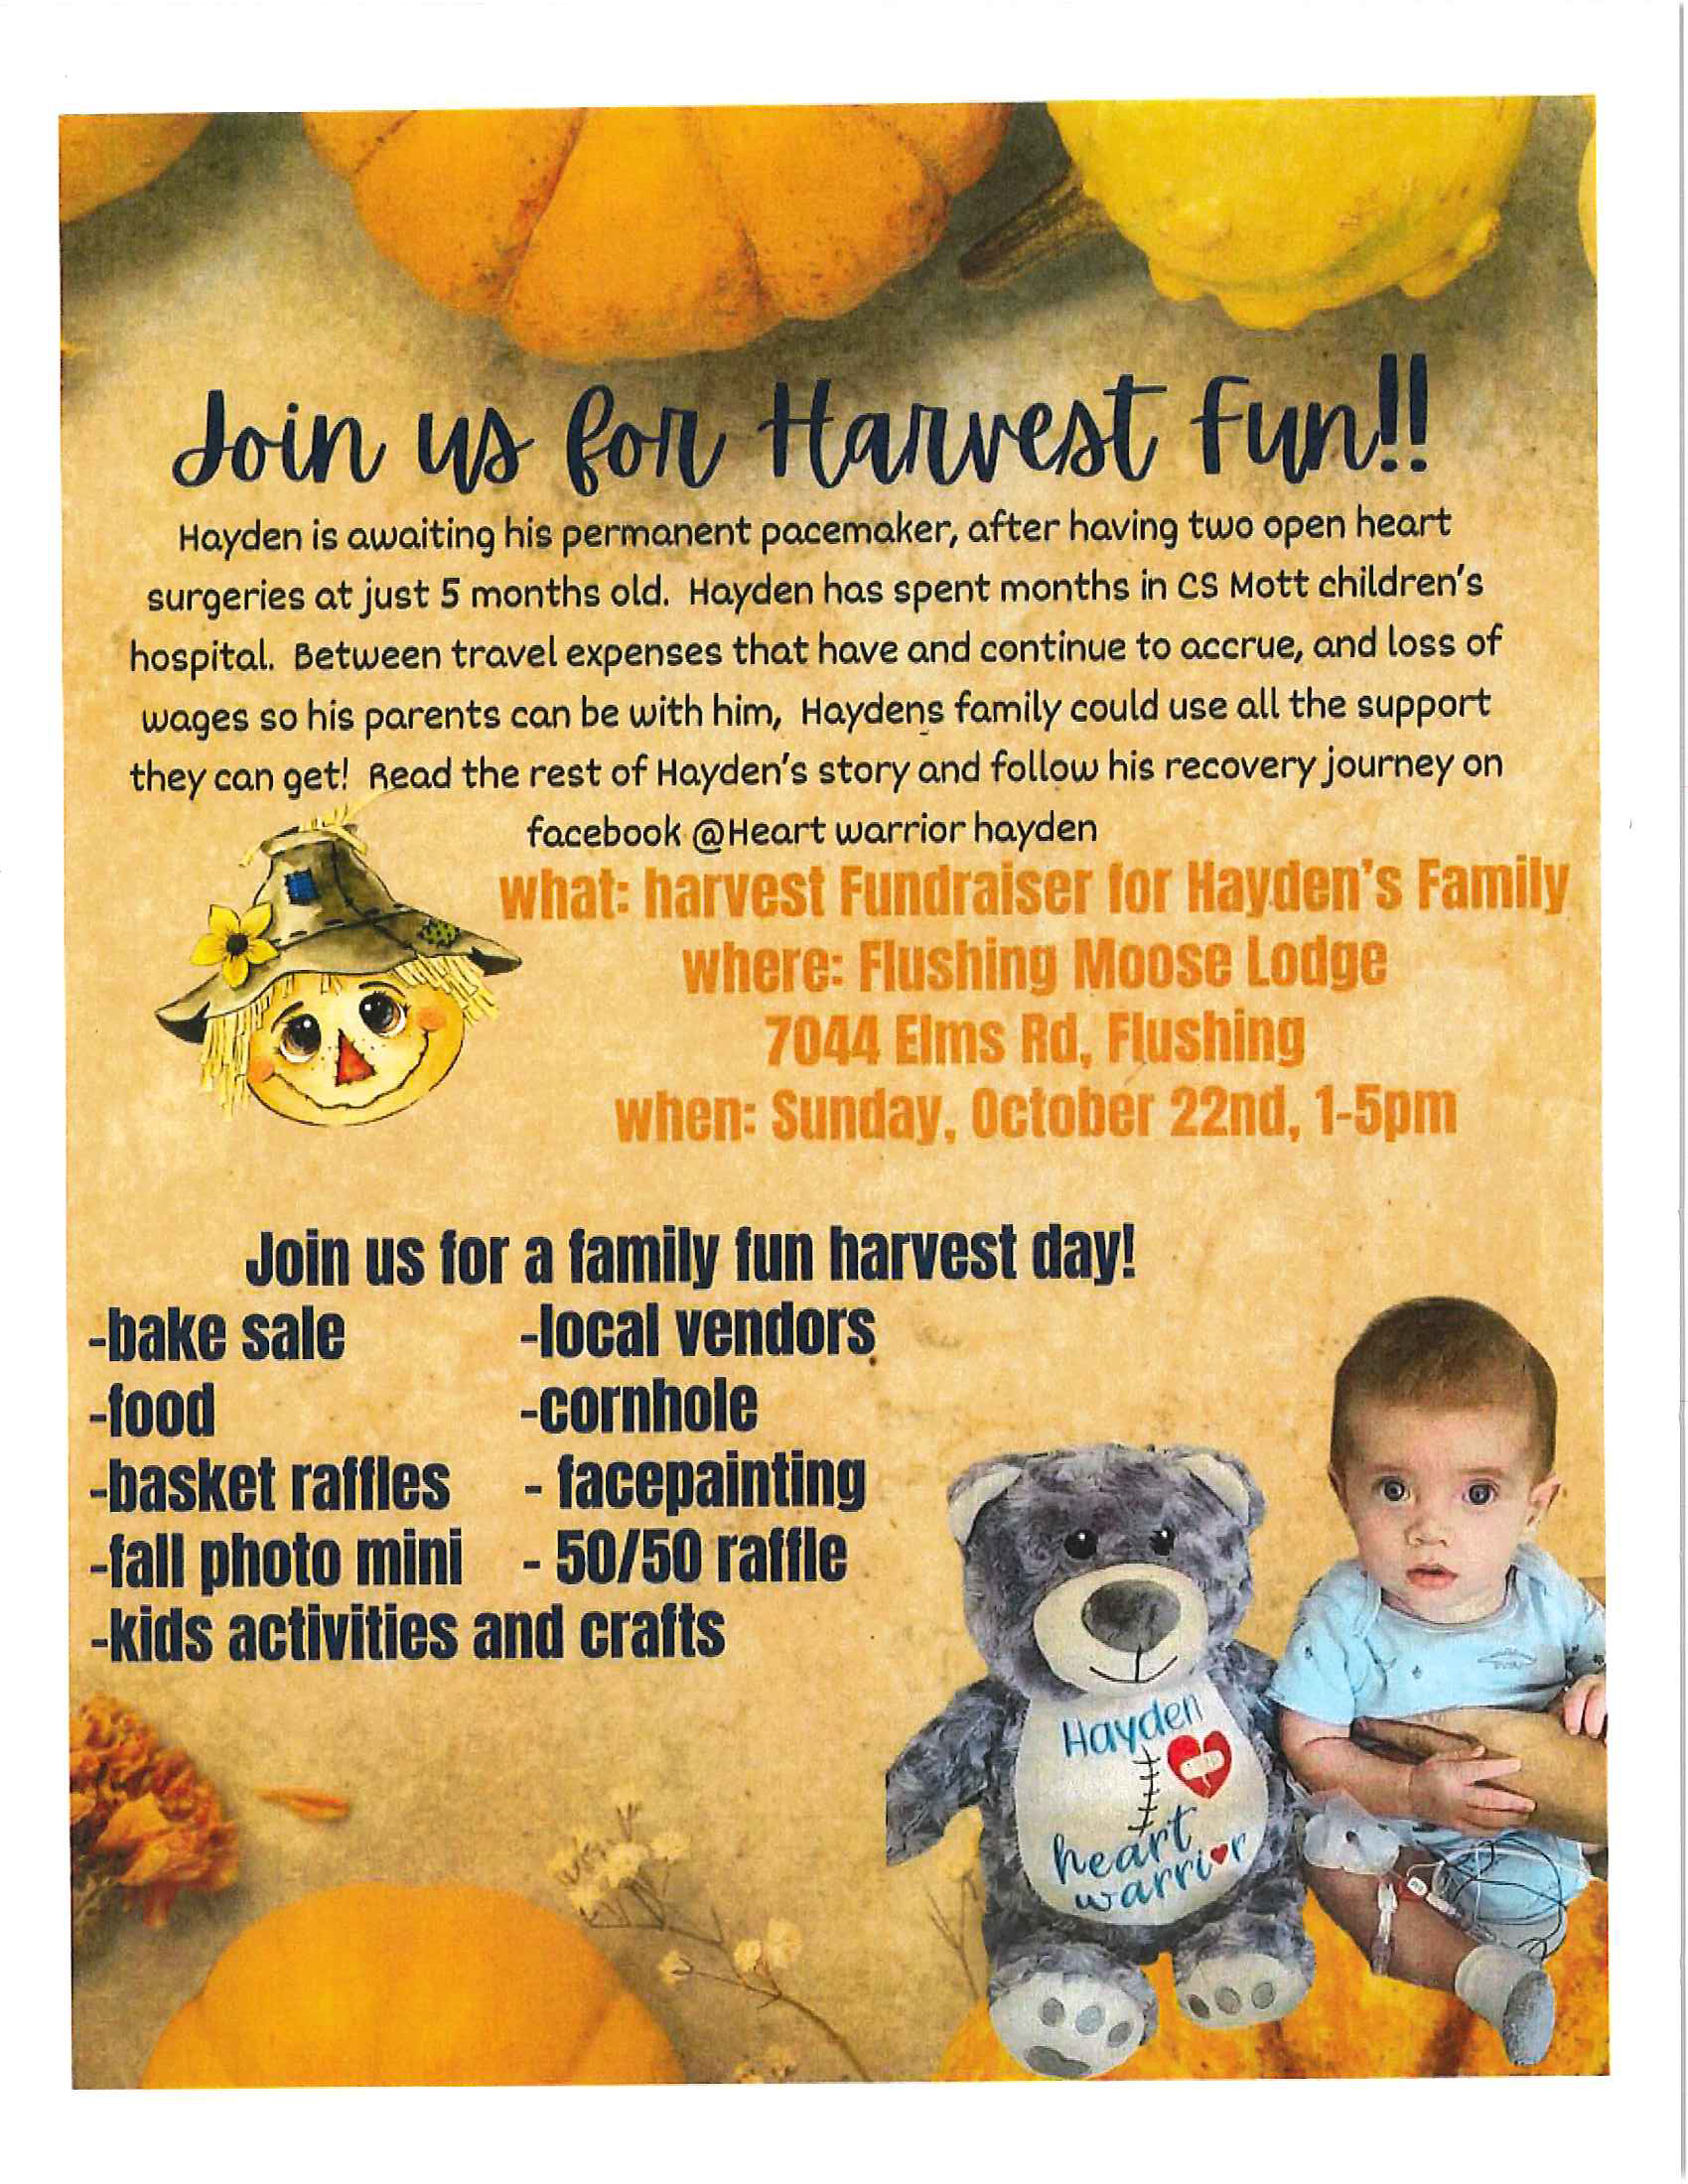 Harvest Fundraiser for Hayden